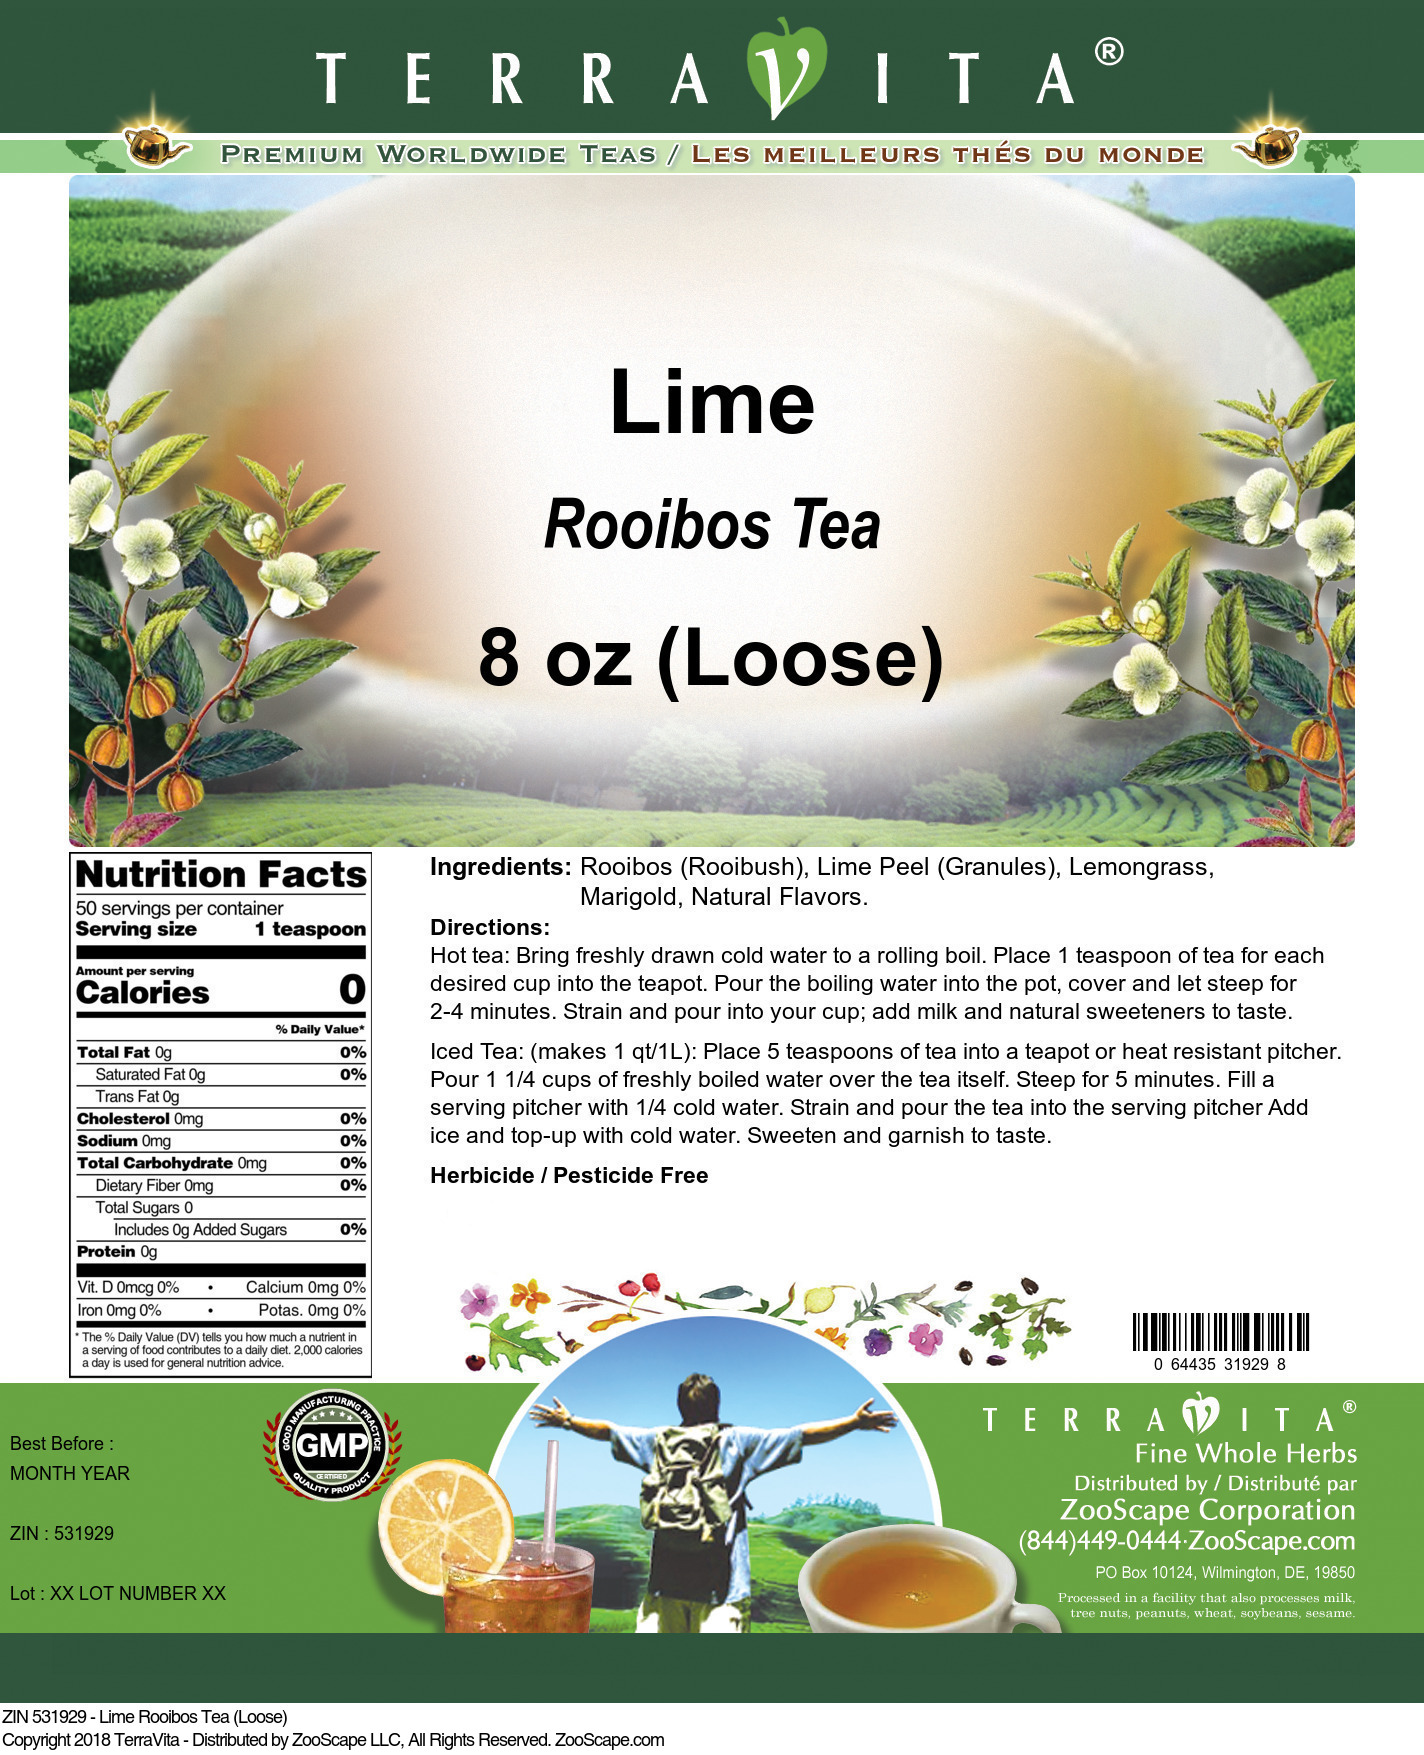 Lime Rooibos Tea (Loose) - Label